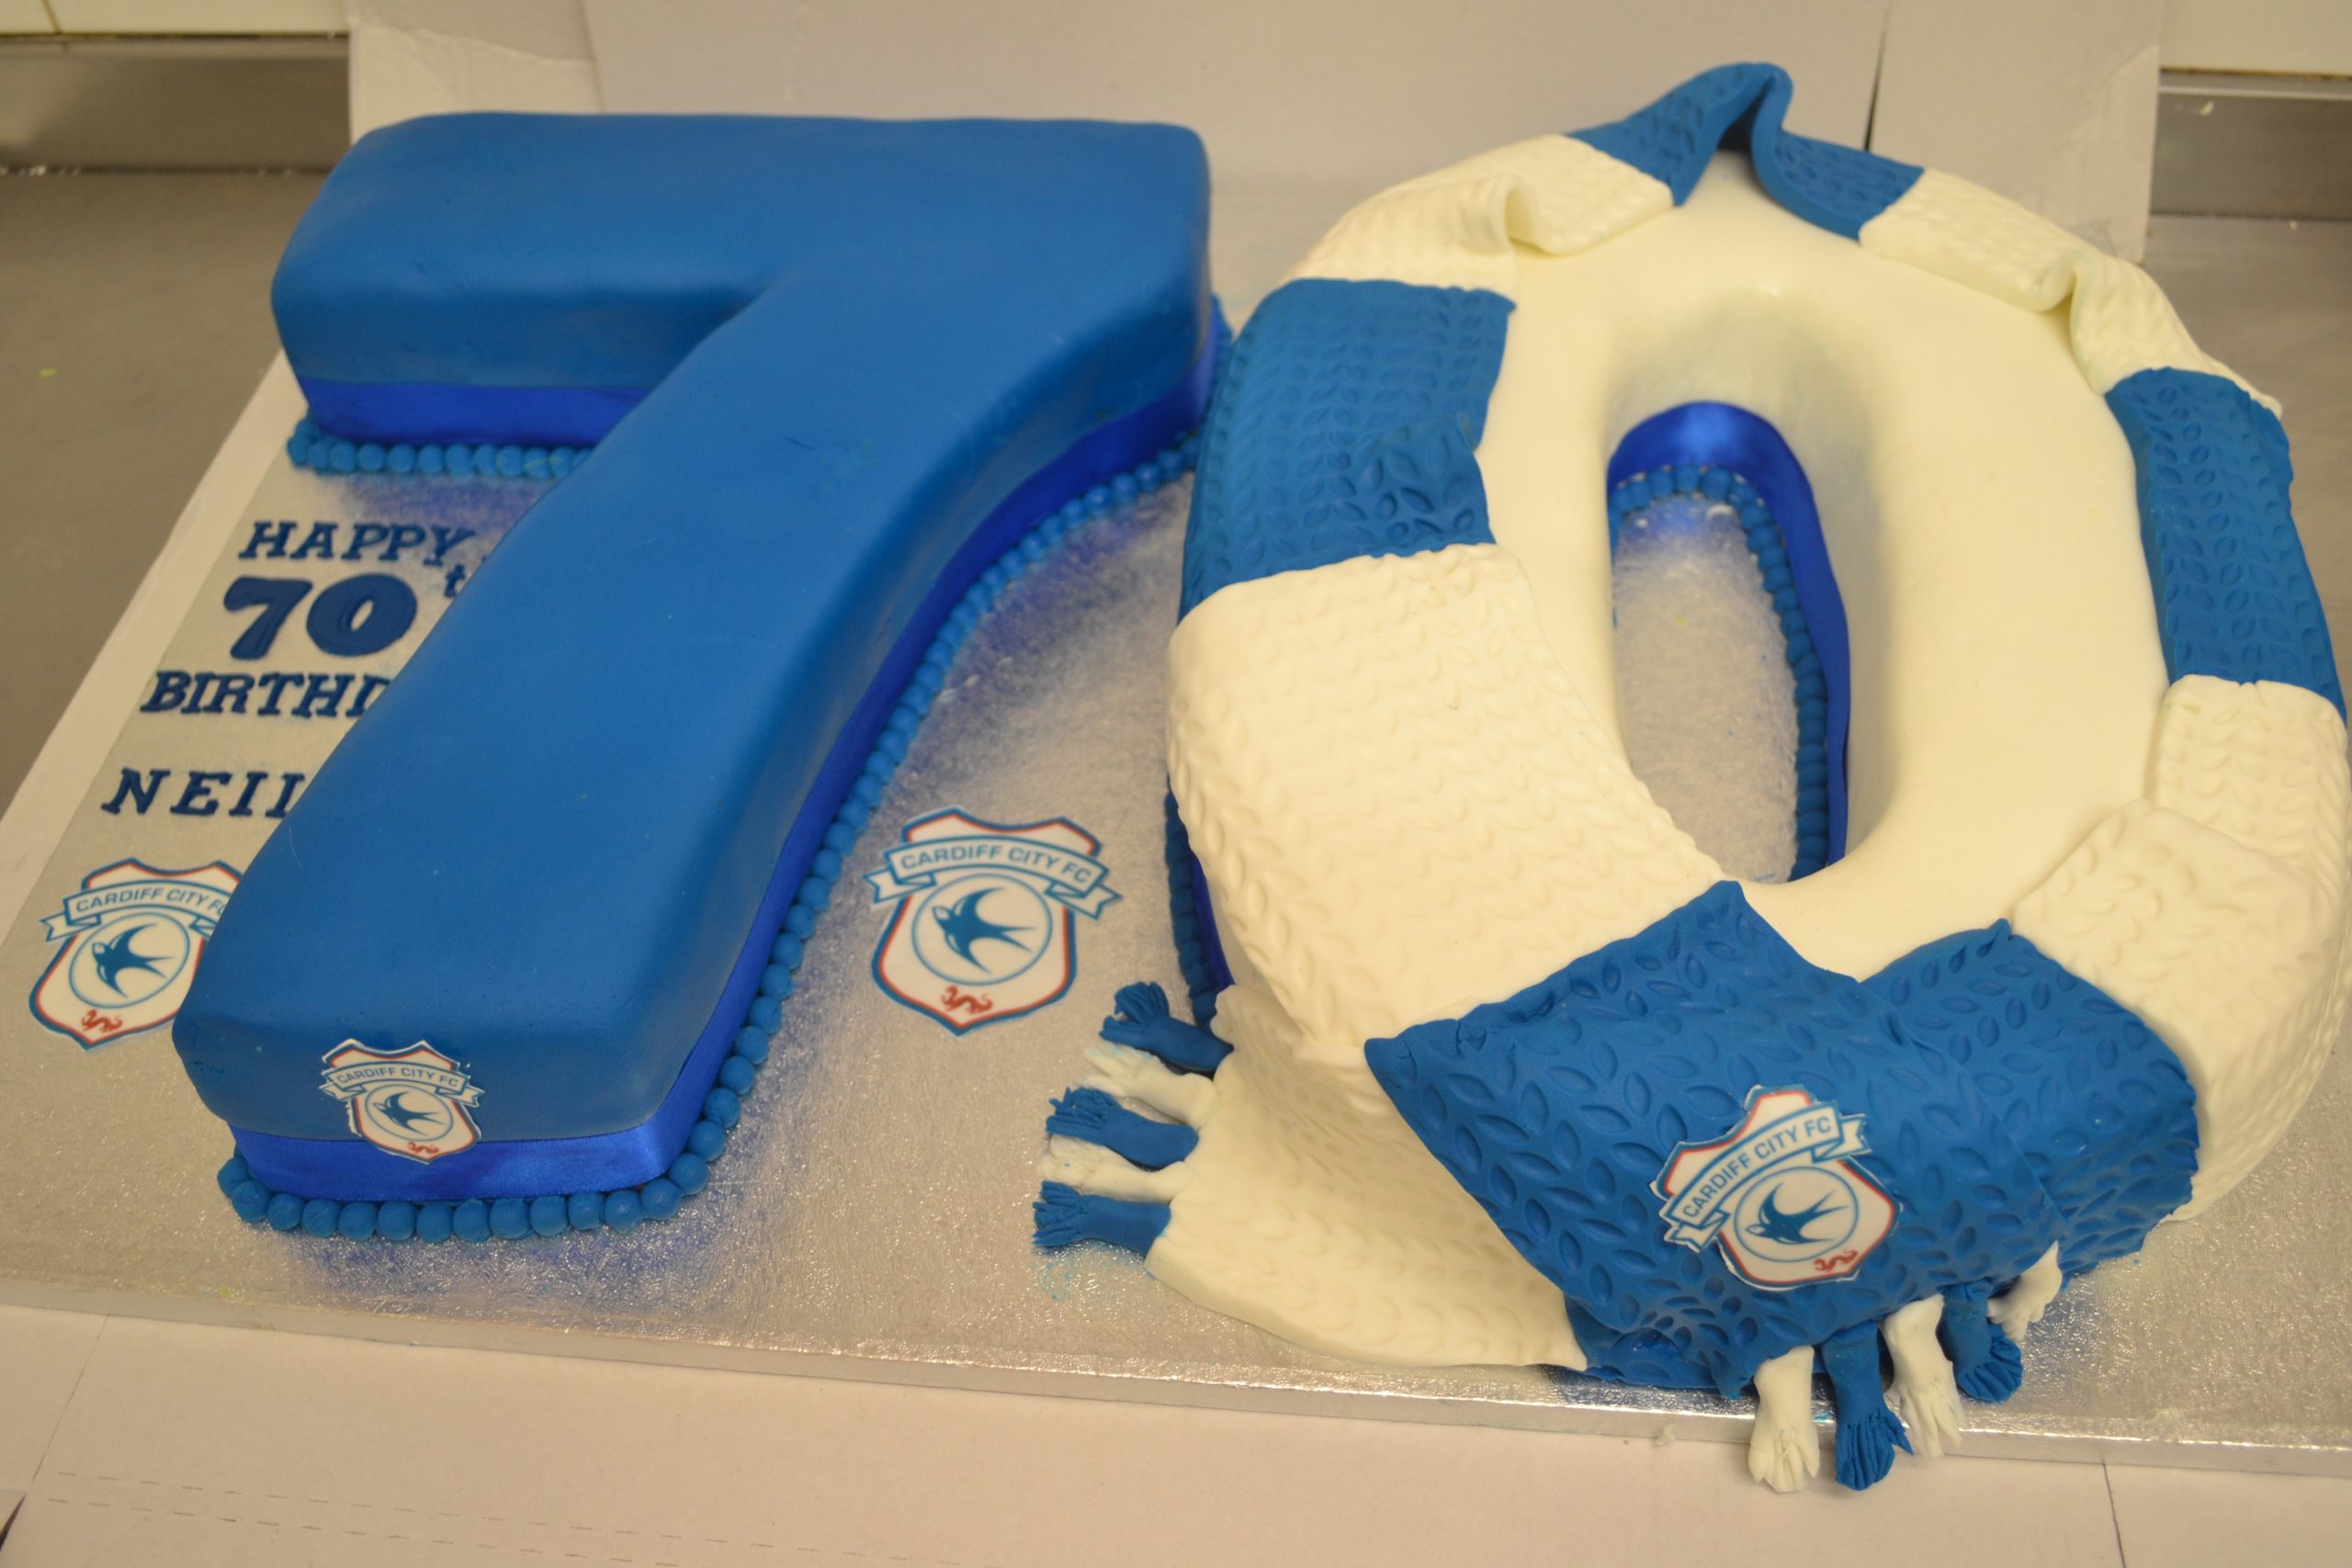 Cardiff City Birthday Cake